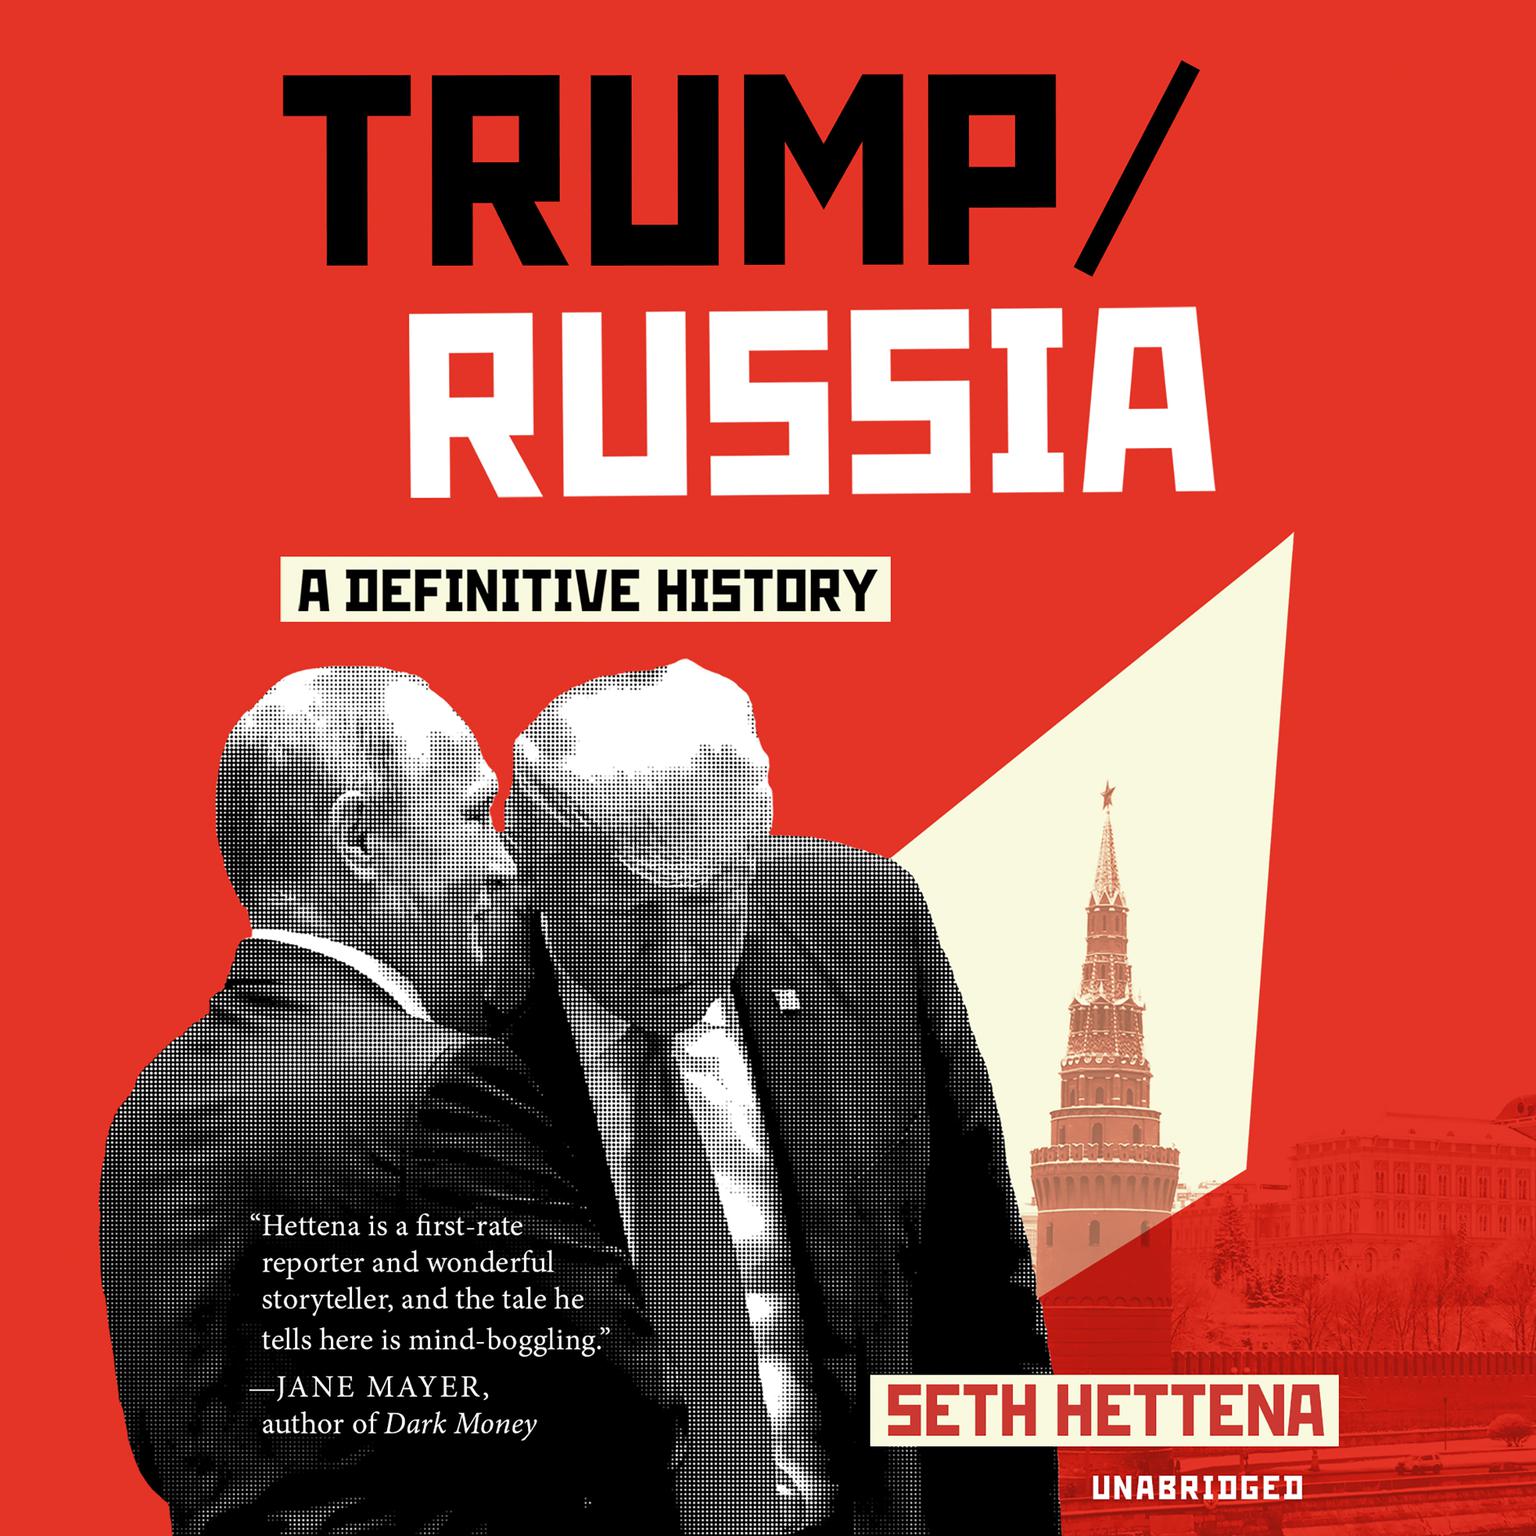 Trump/Russia: A Definitive History Audiobook, by Seth Hettena